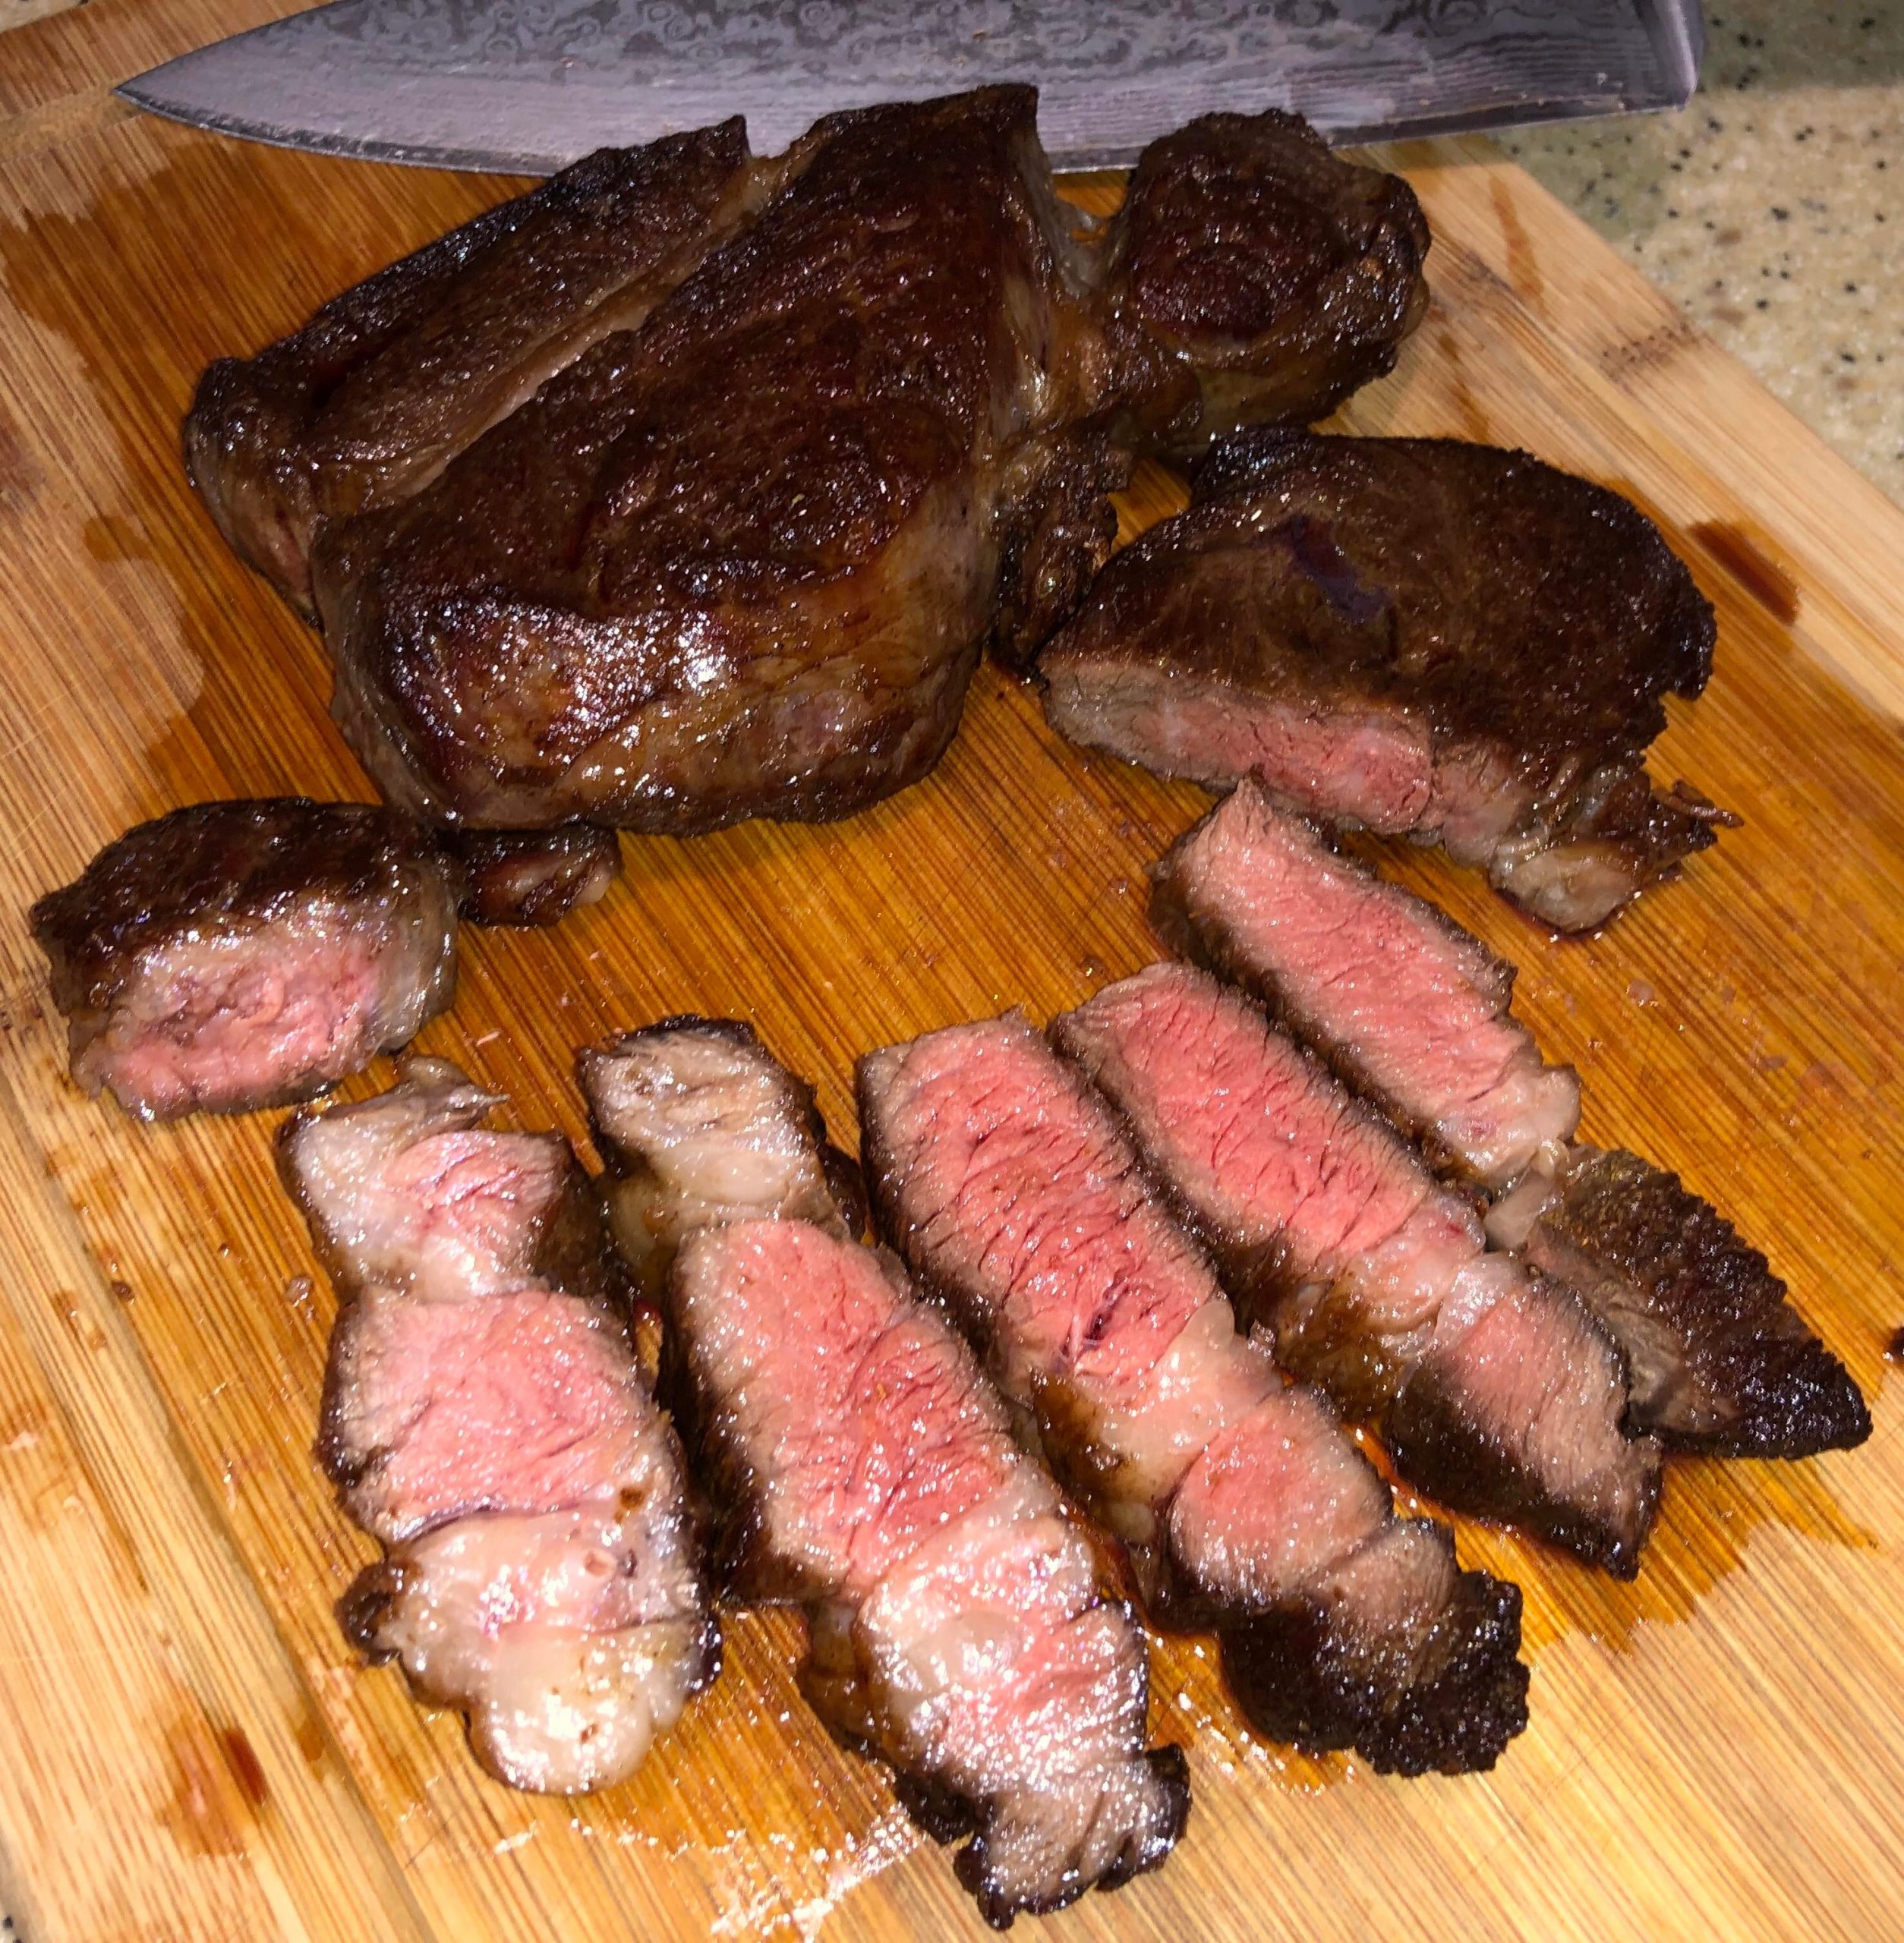 American wagyu chuckeye : steak